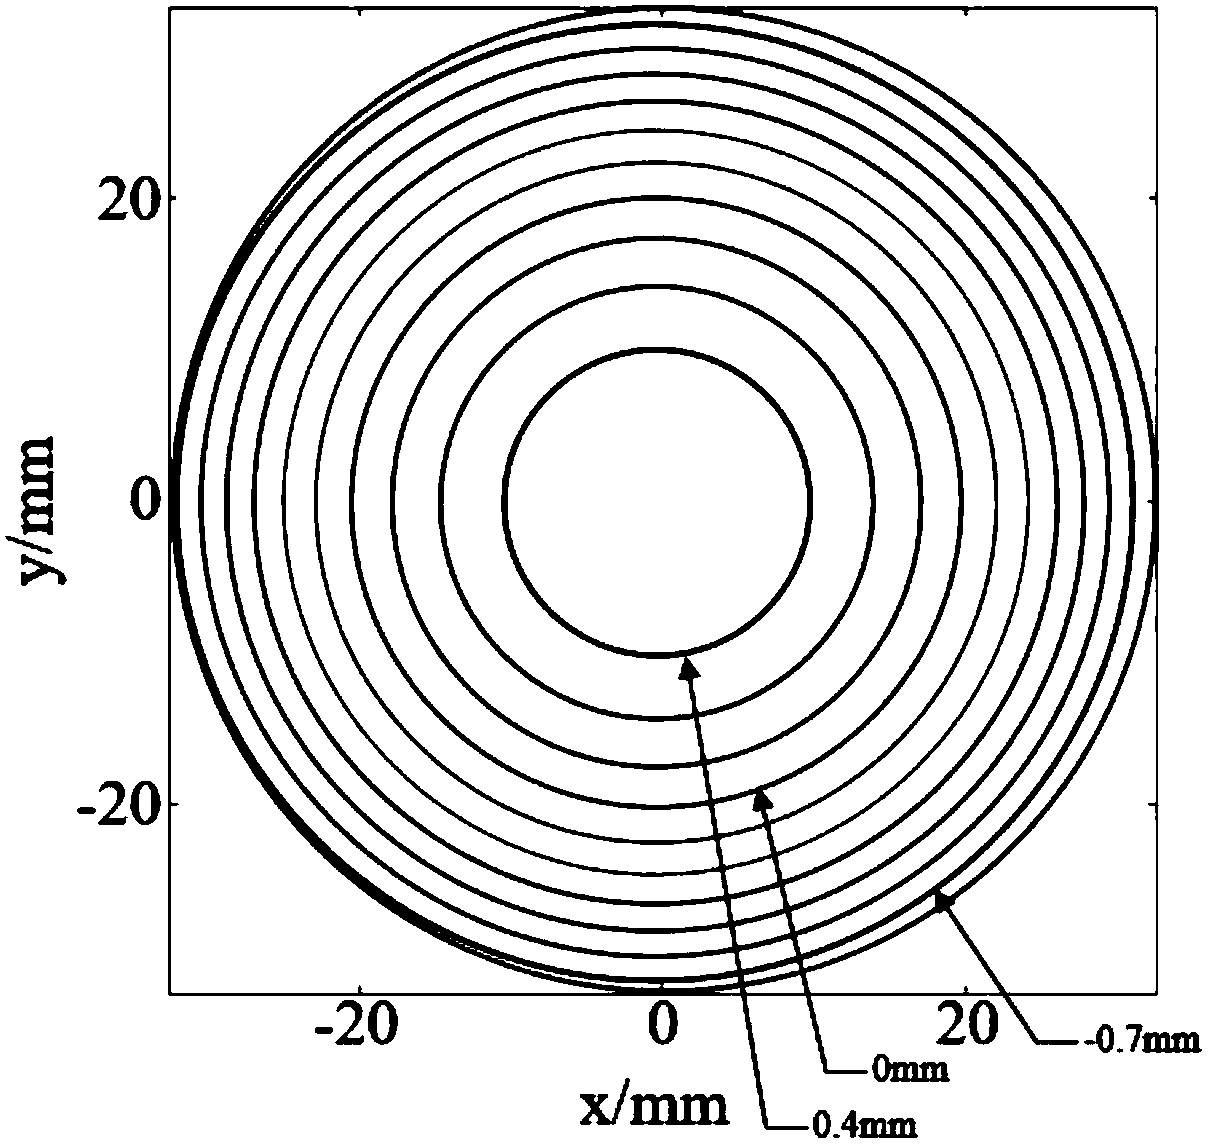 Novel optical lens measuring method